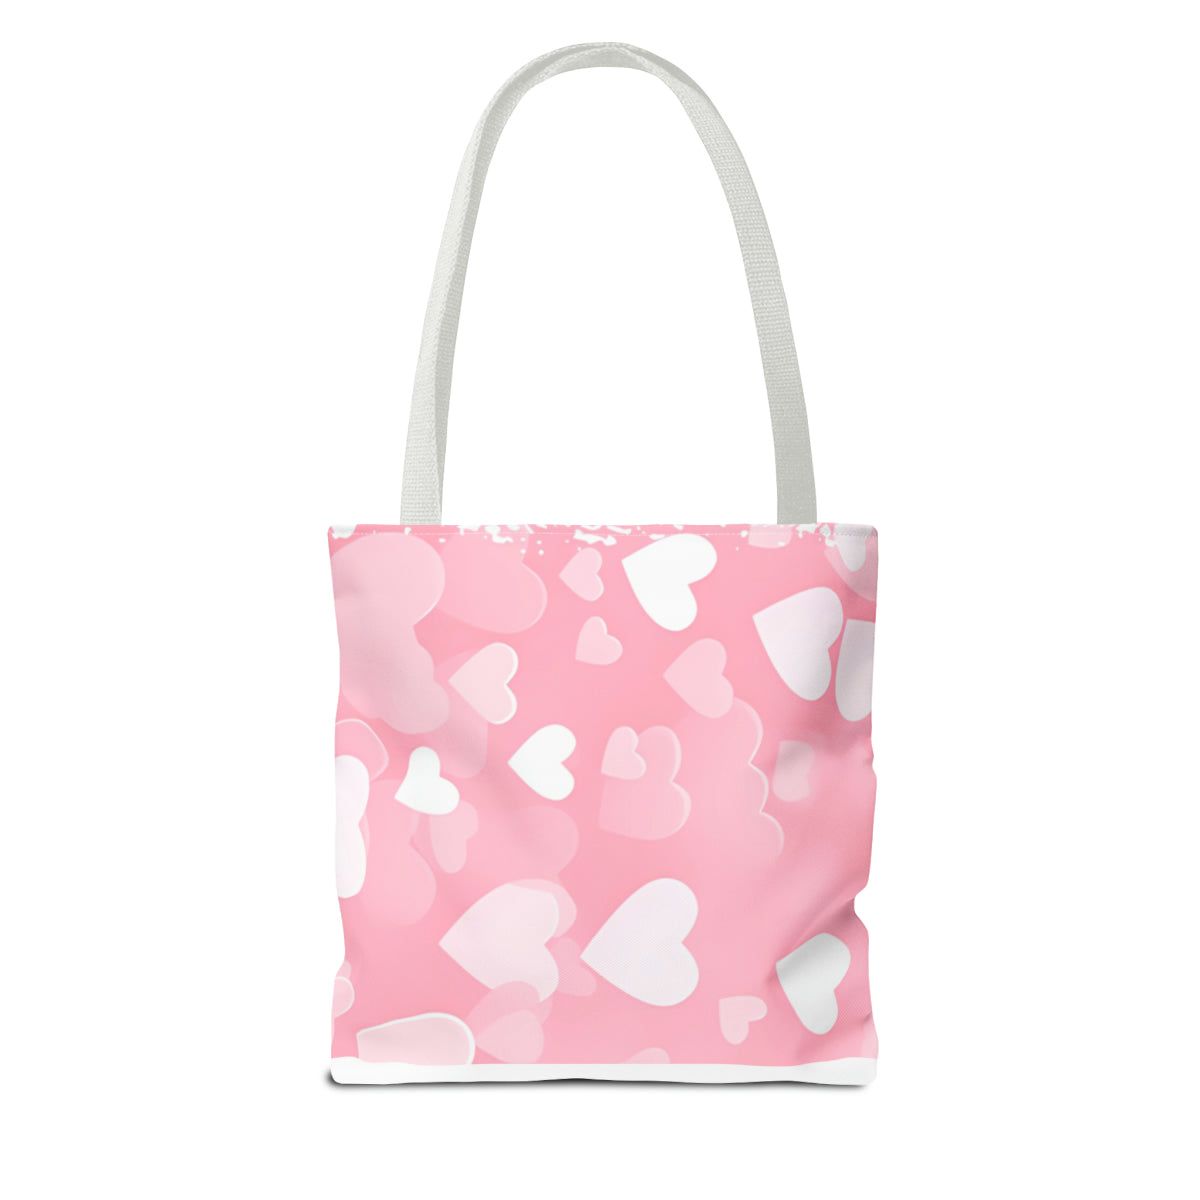 Tote Bag light pink hearts